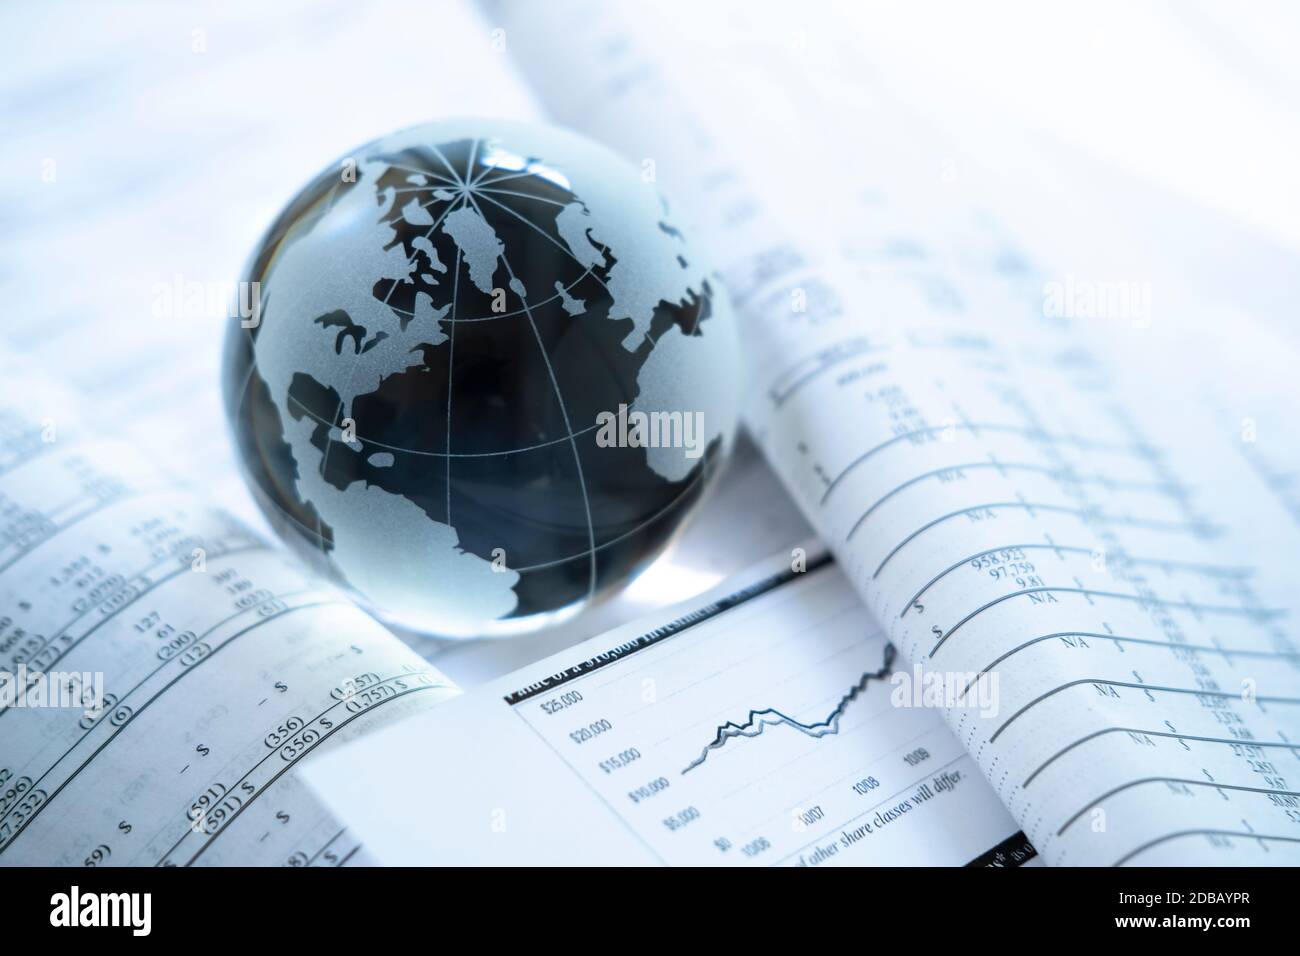 Glass globe an financial documents Stock Photo